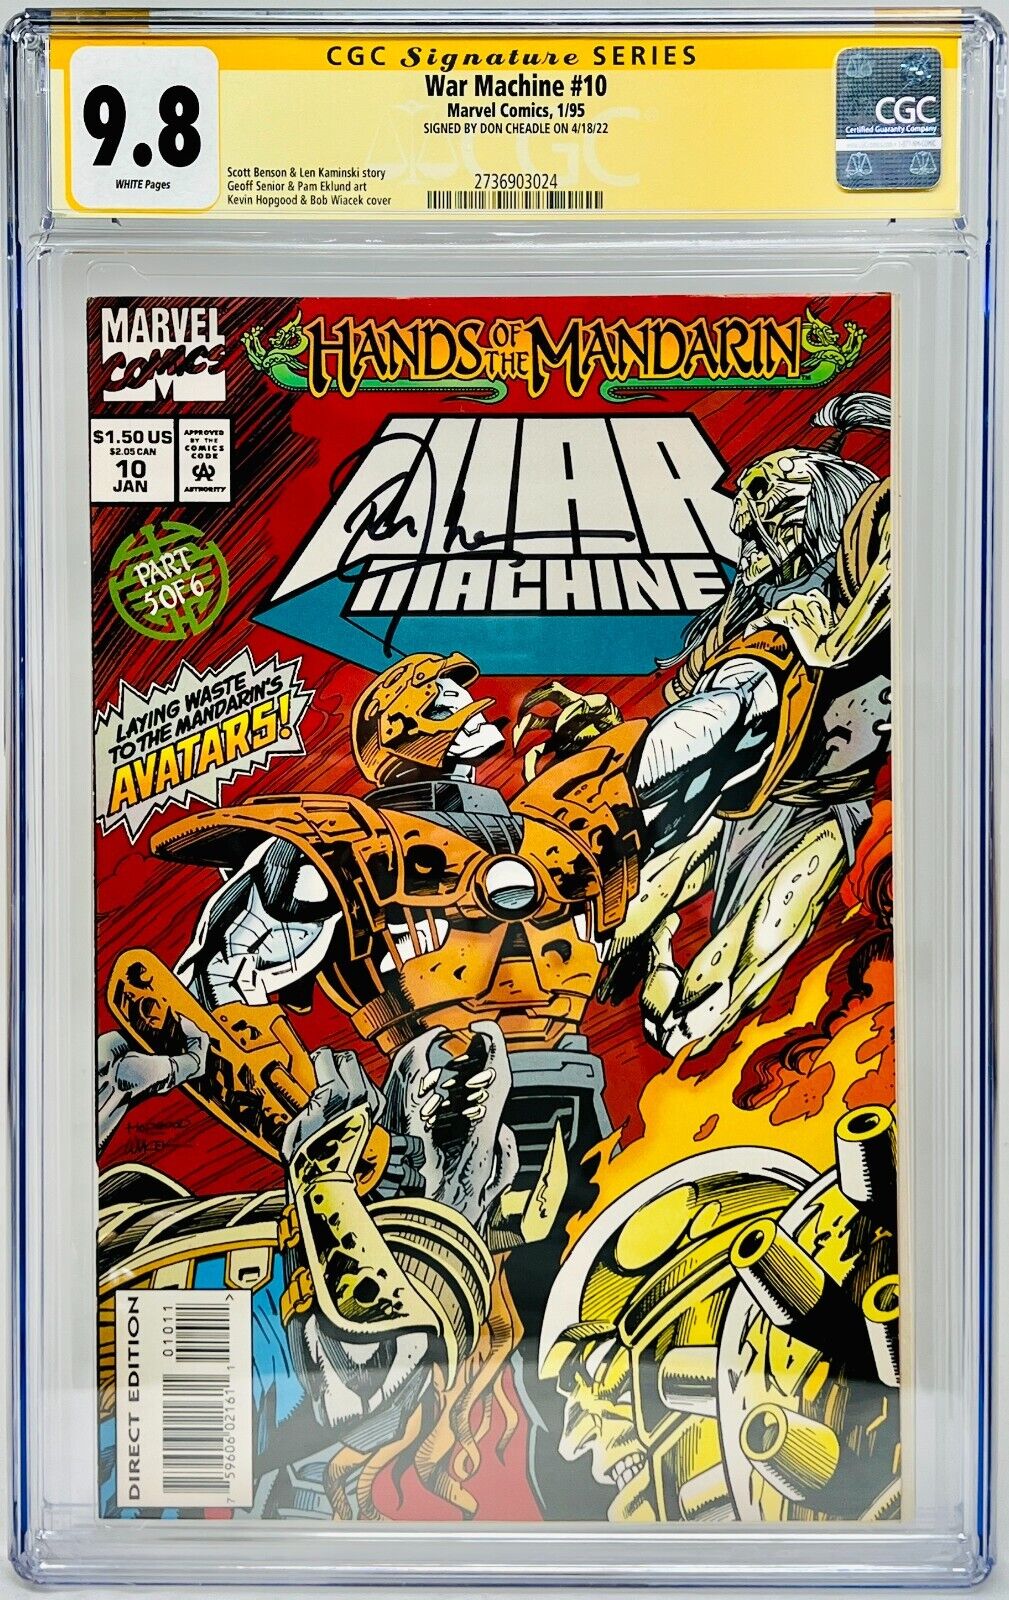 Don Cheadle Signed CGC Signature Series Graded 9.8 Marvel War Machine #10